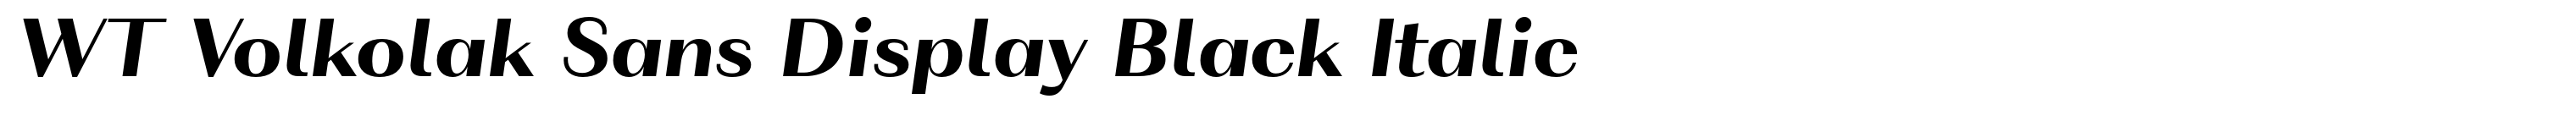 WT Volkolak Sans Display Black Italic